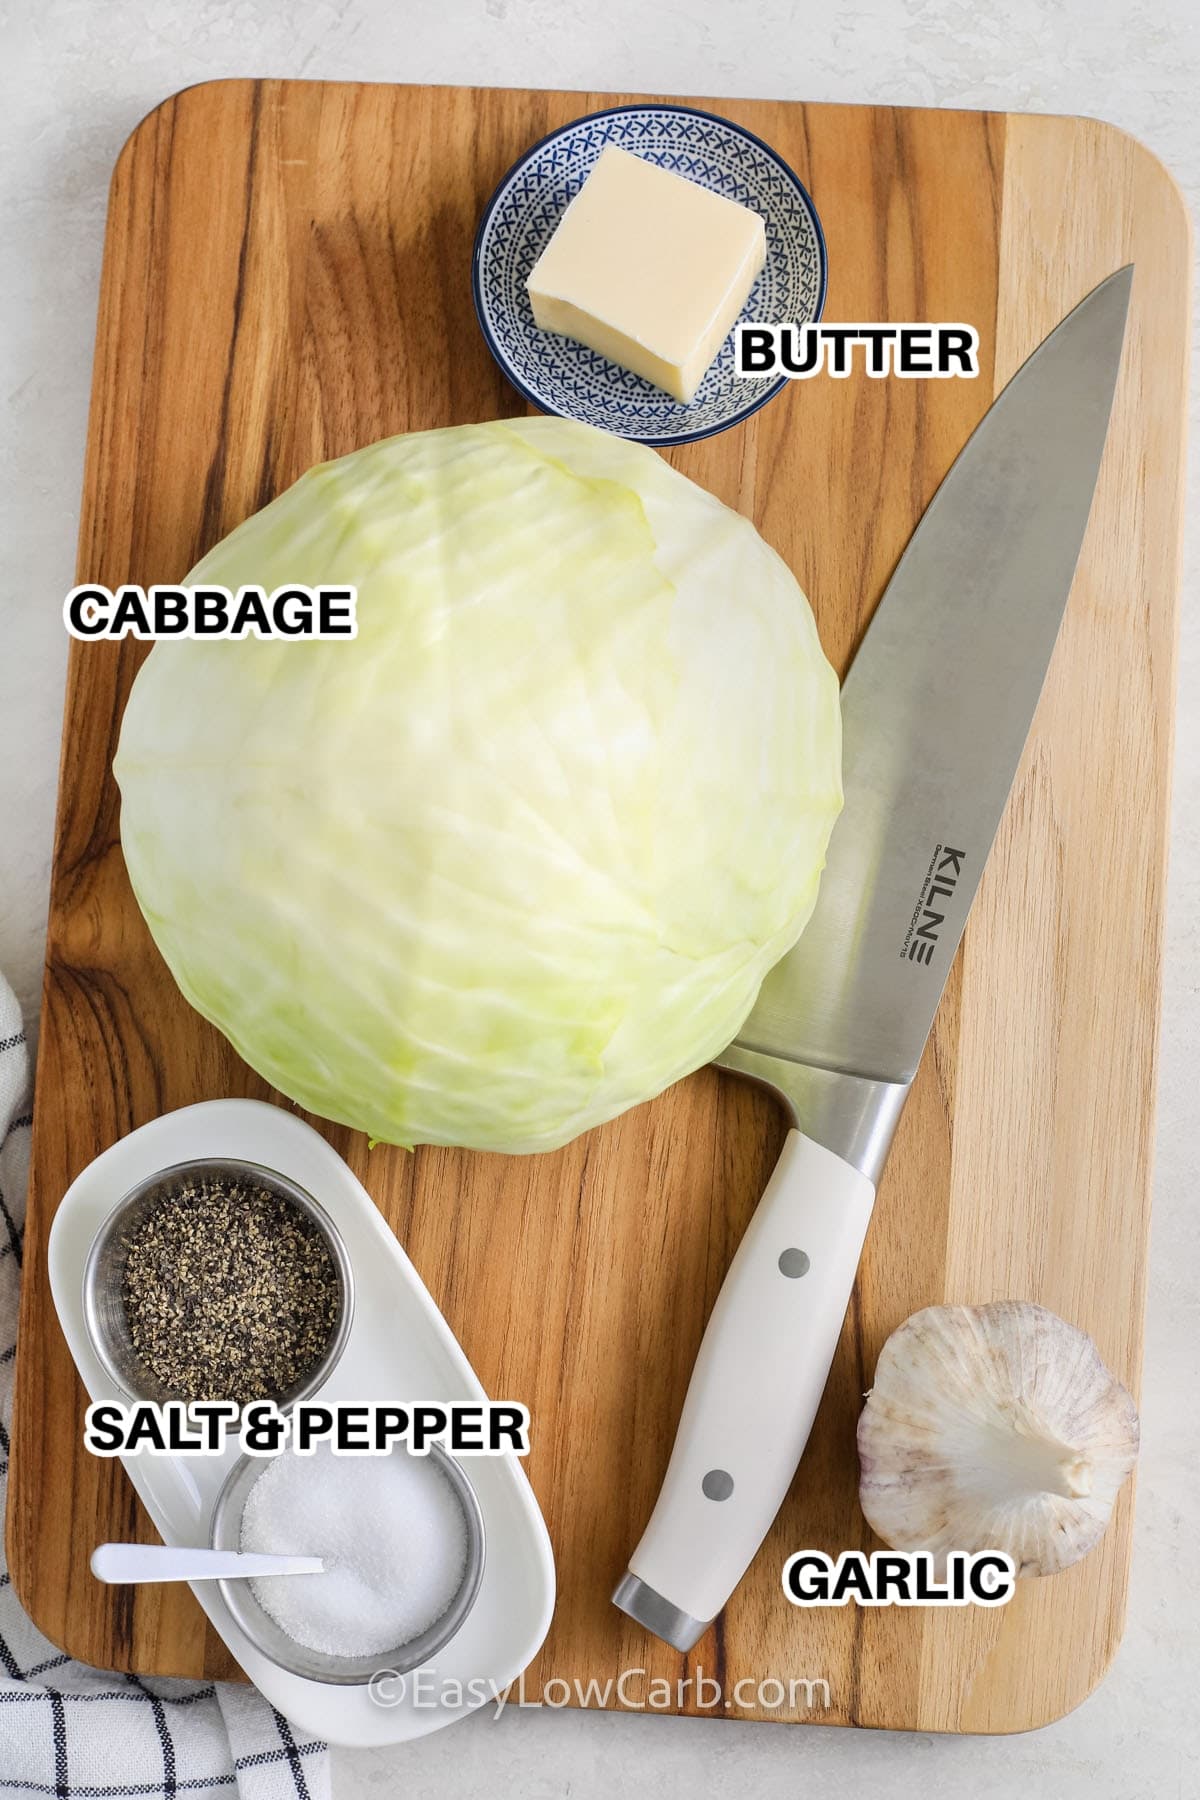 ingredients to make cabbage steak labelled: butter, cabbage, salt, pepper, and garlic